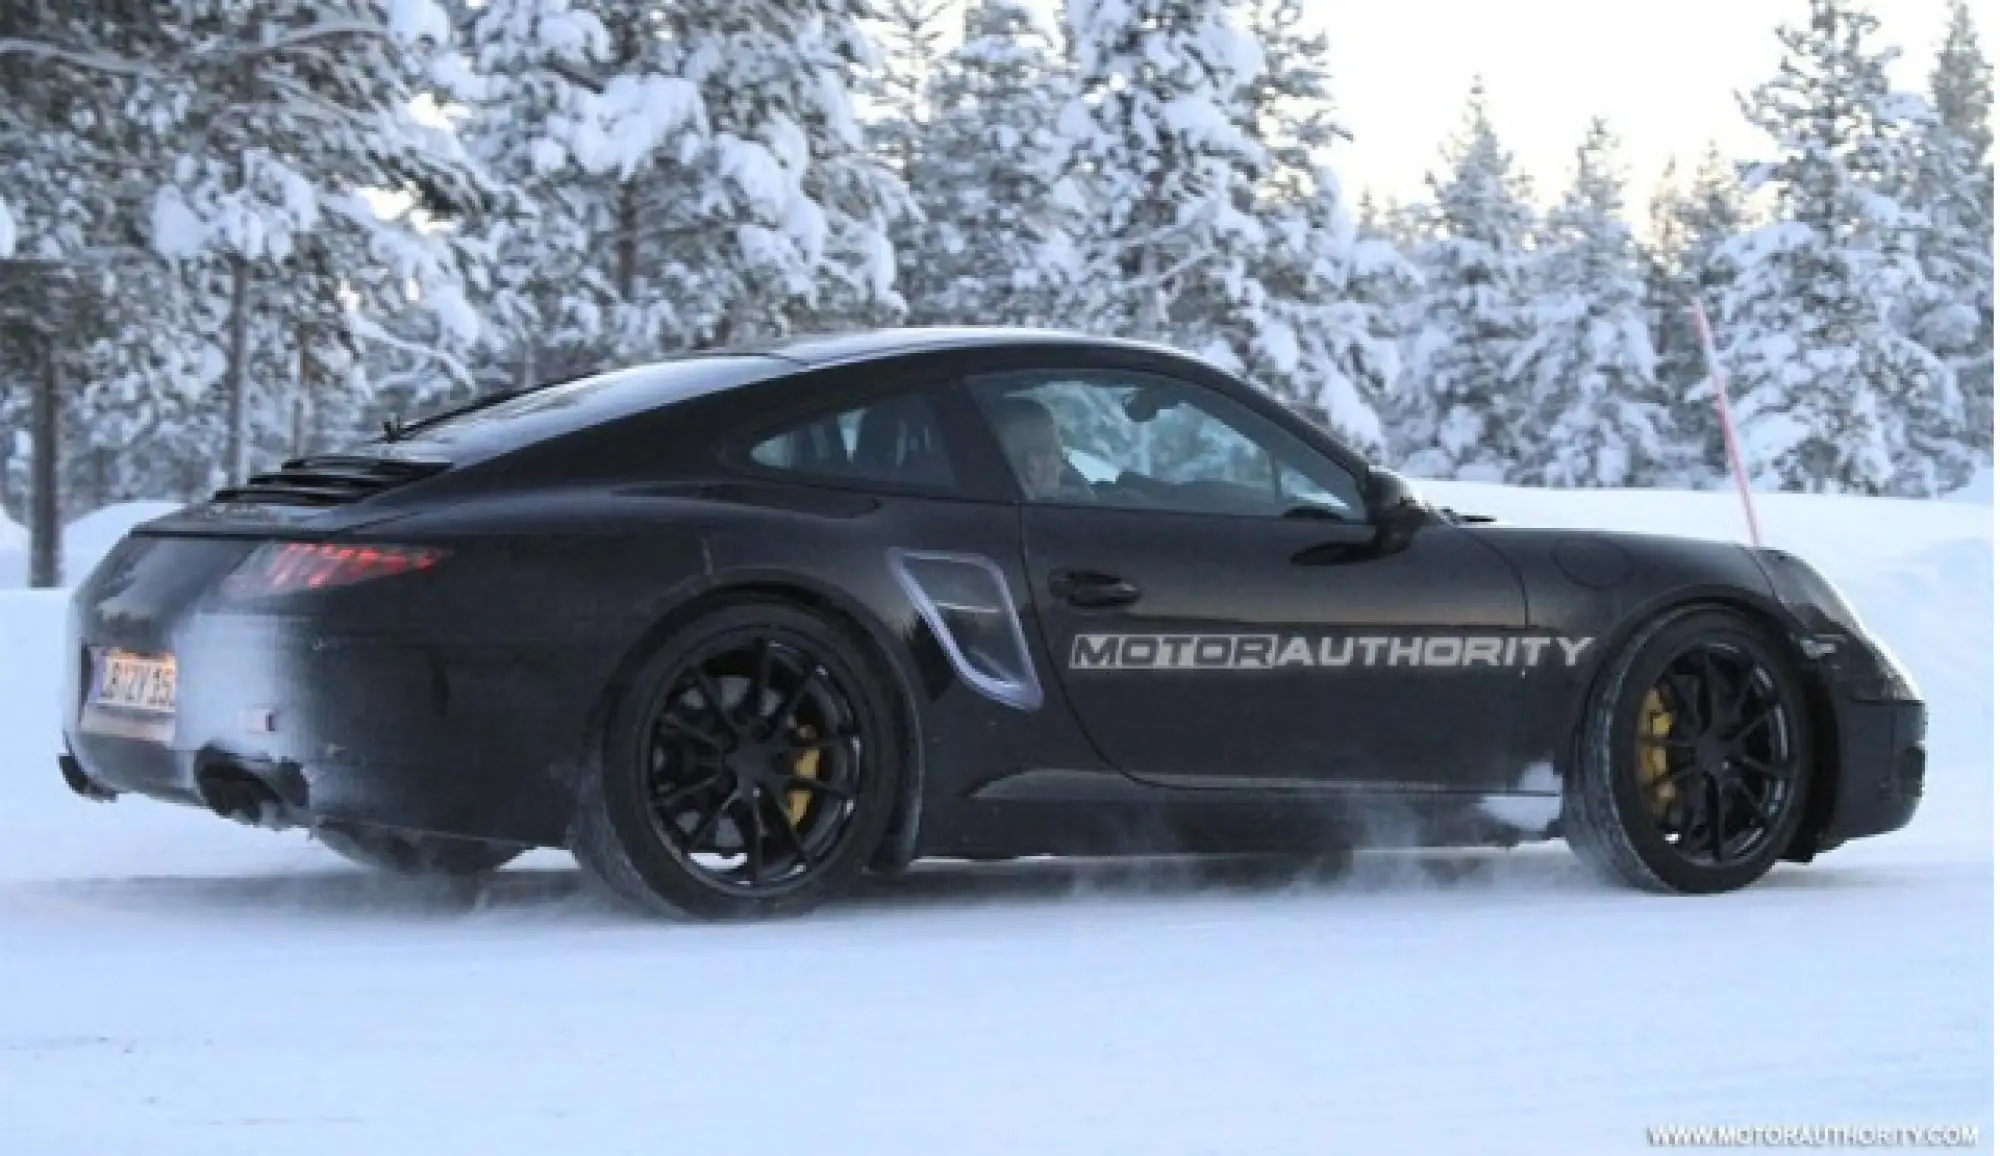 Porsche 911 2012 - Spy shots 19-01-2011 - 17